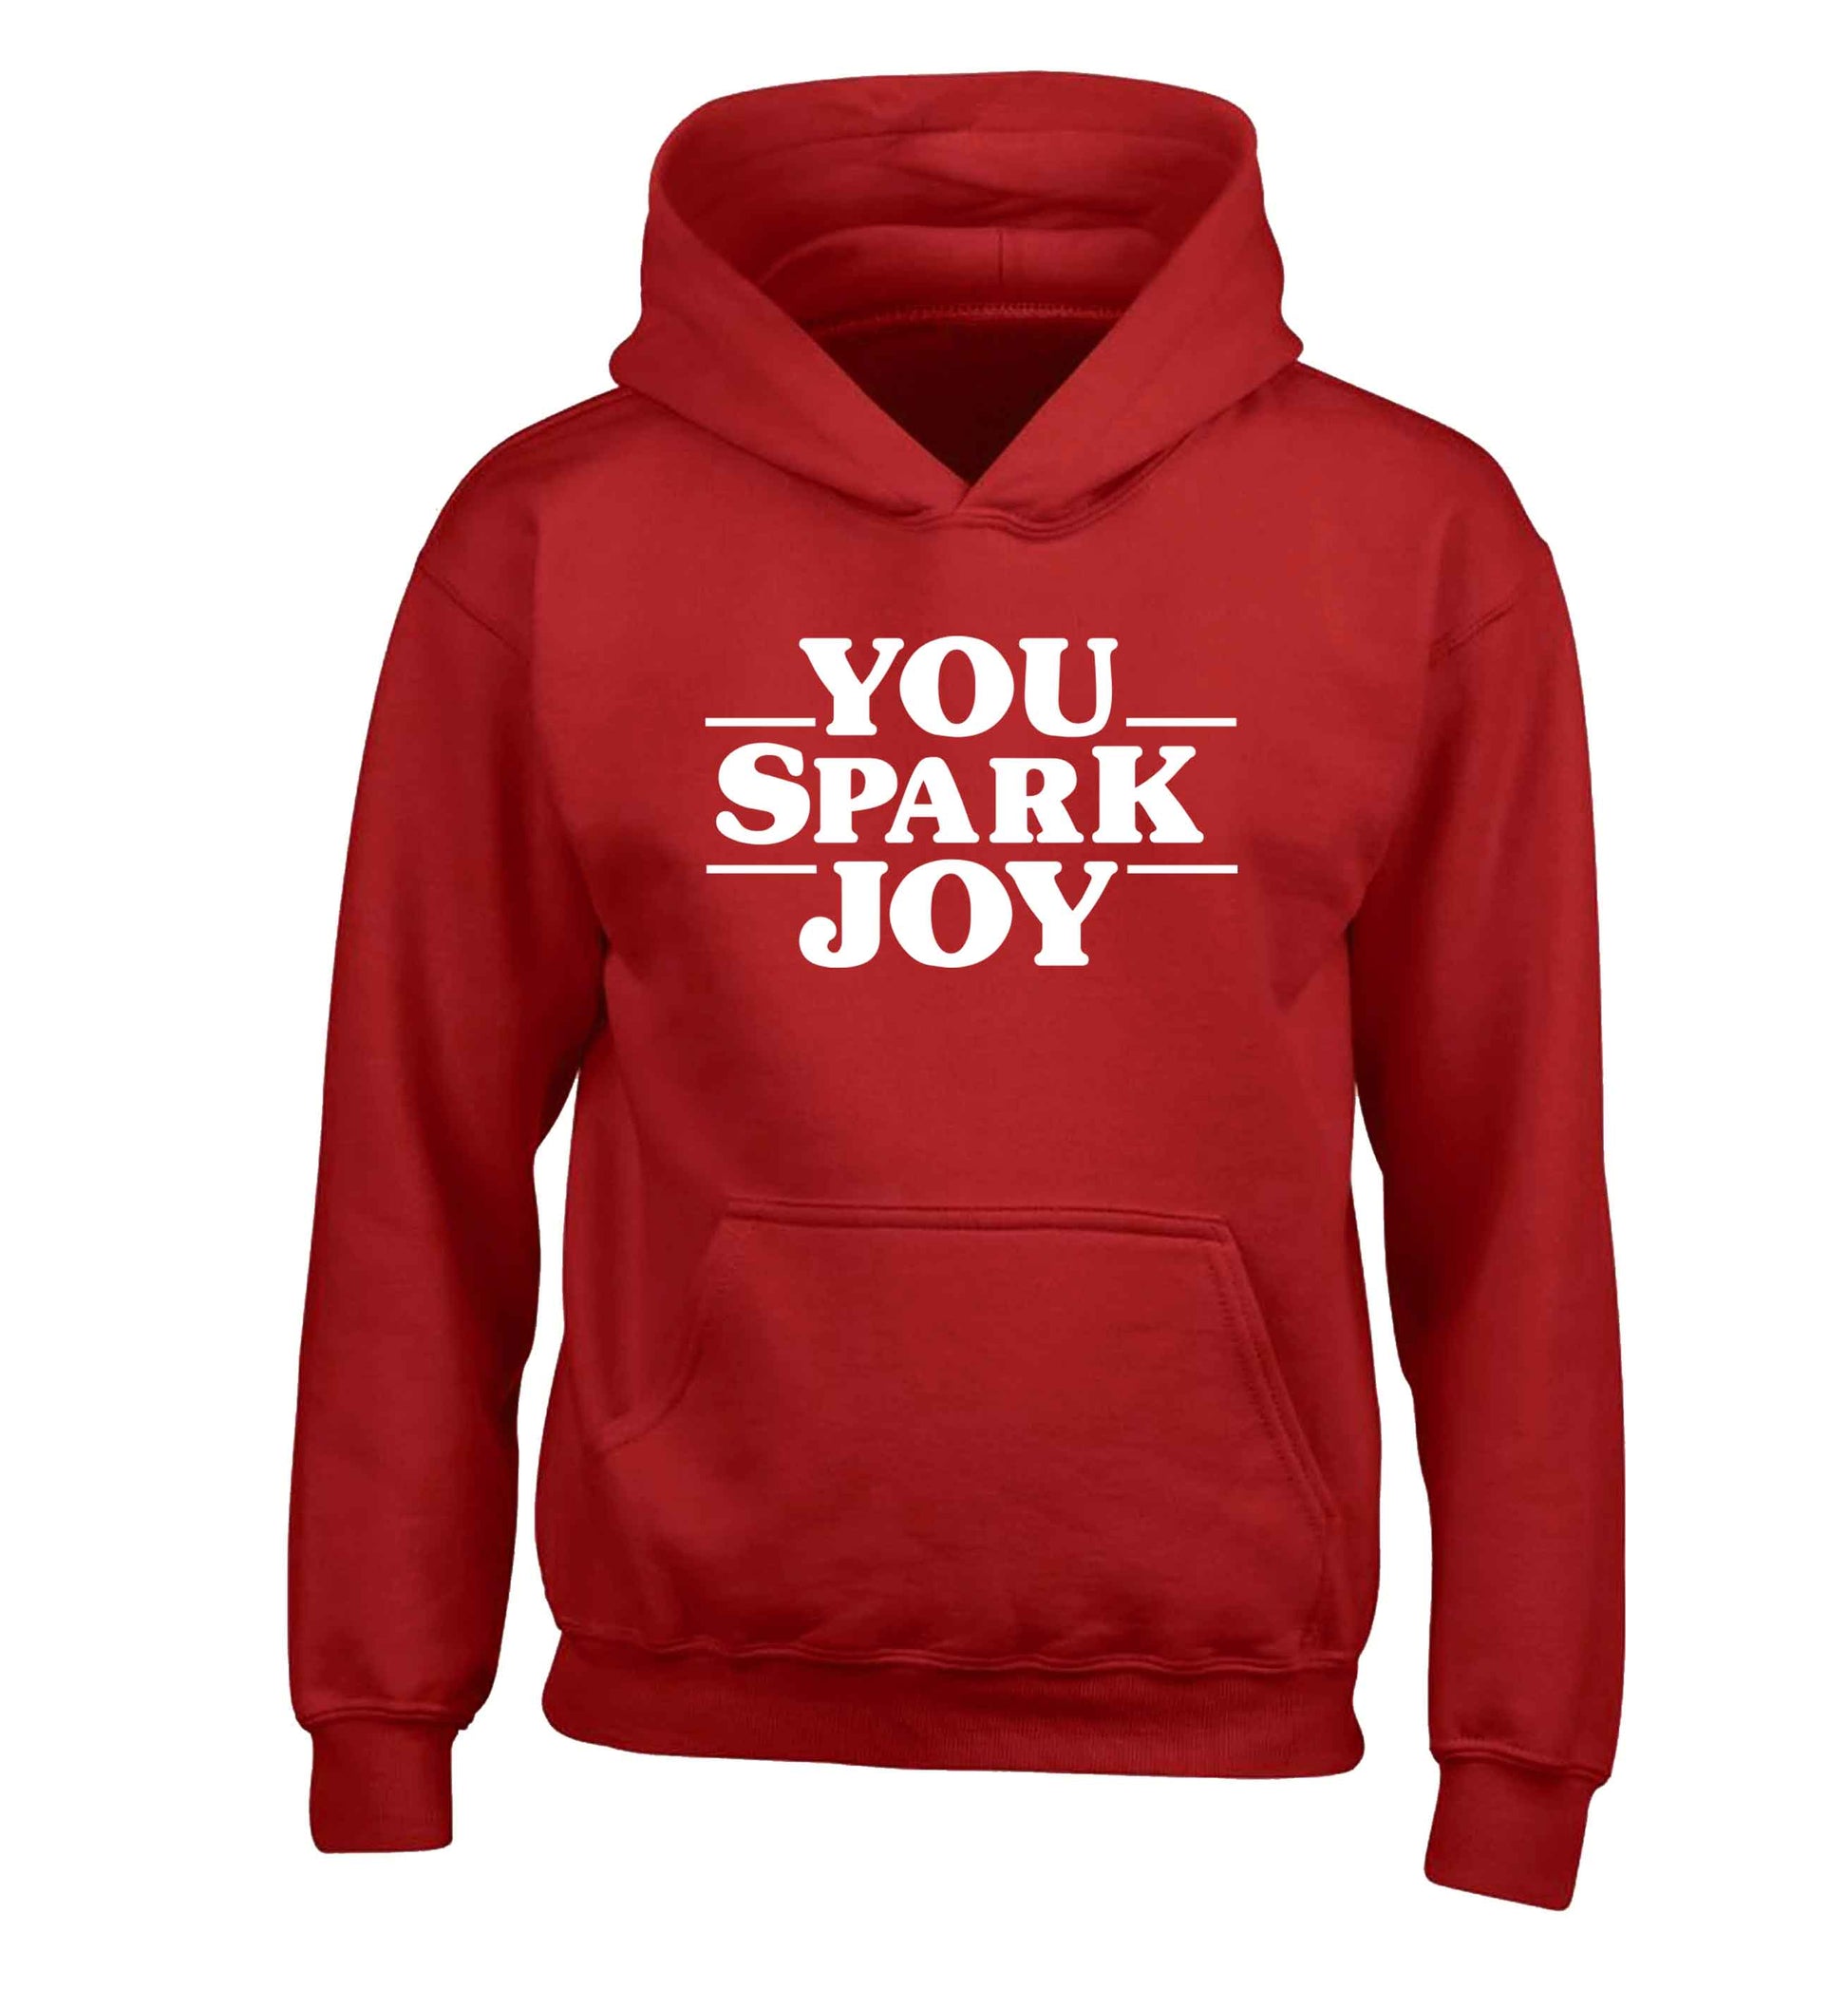 You spark joy children's red hoodie 12-13 Years